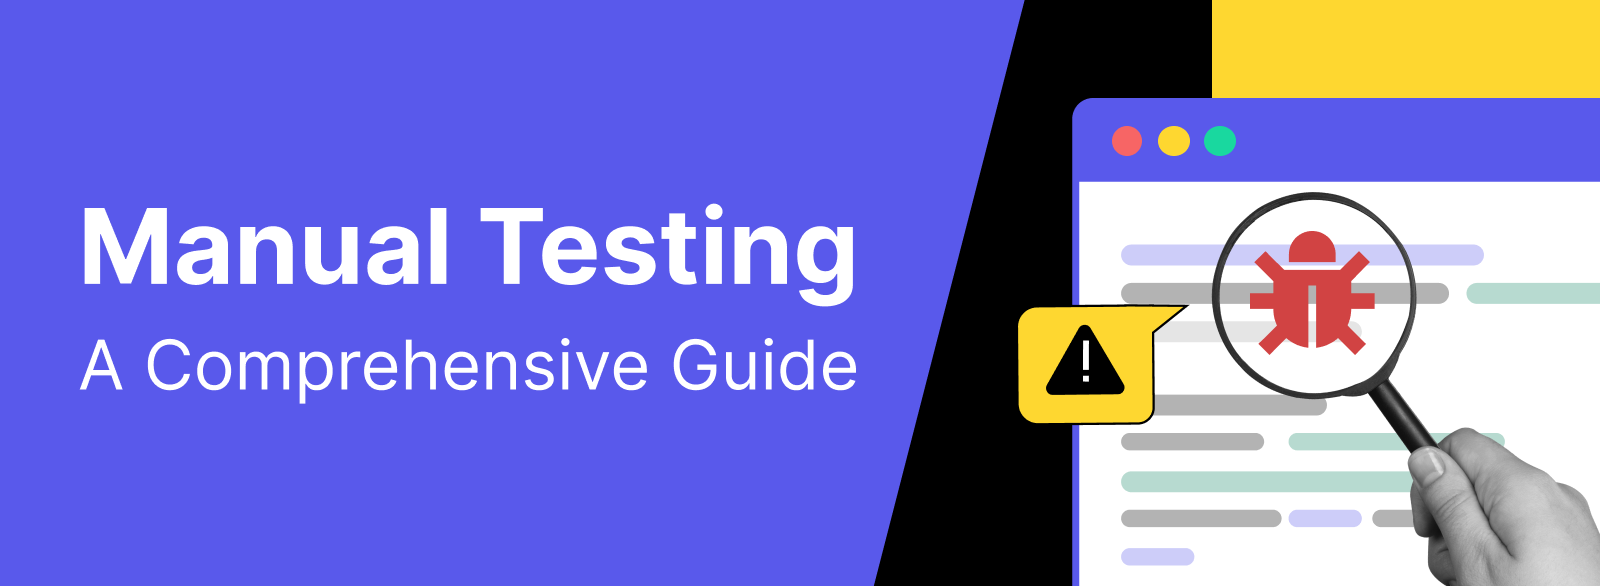 Manual Testing: A Comprehensive Guide